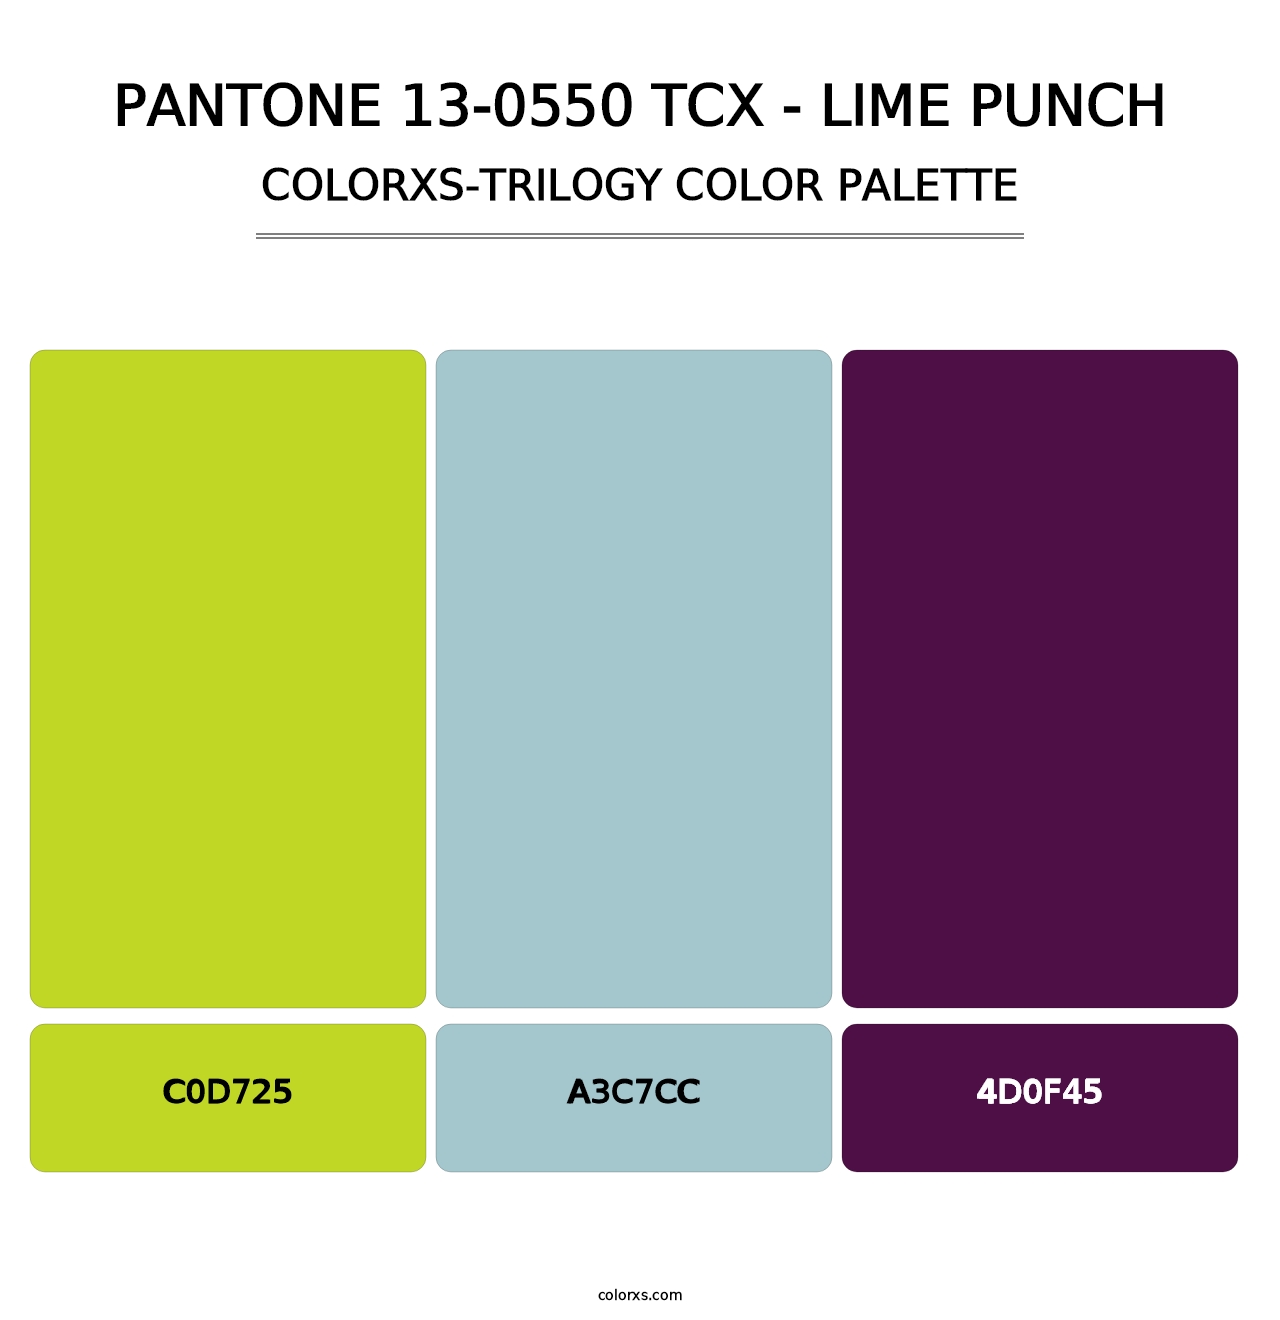 PANTONE 13-0550 TCX - Lime Punch - Colorxs Trilogy Palette